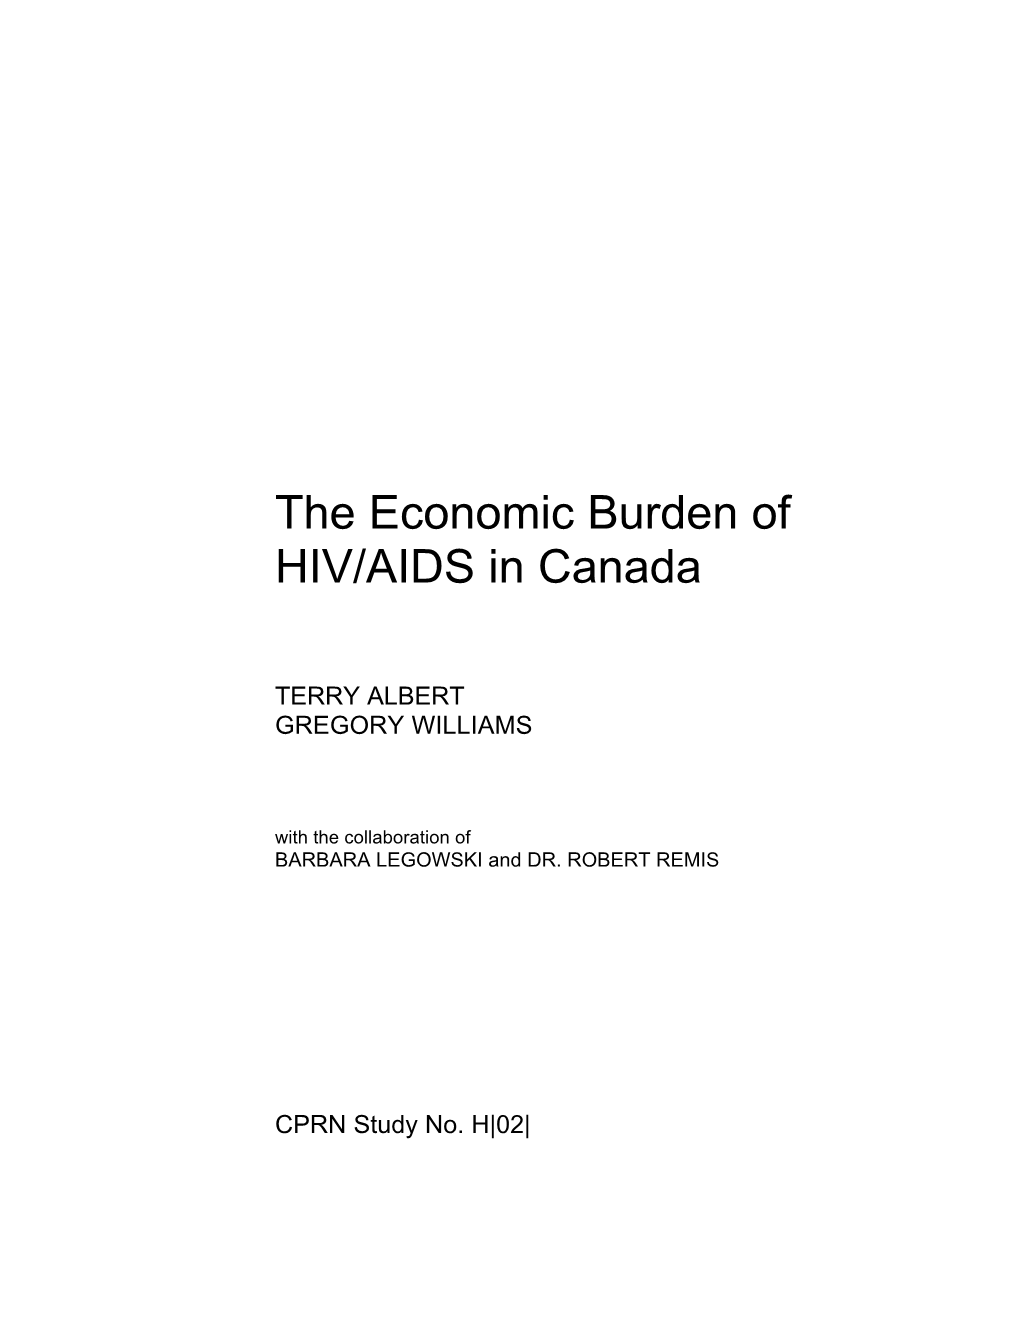 The Economic Burden of HIV/AIDS in Canada